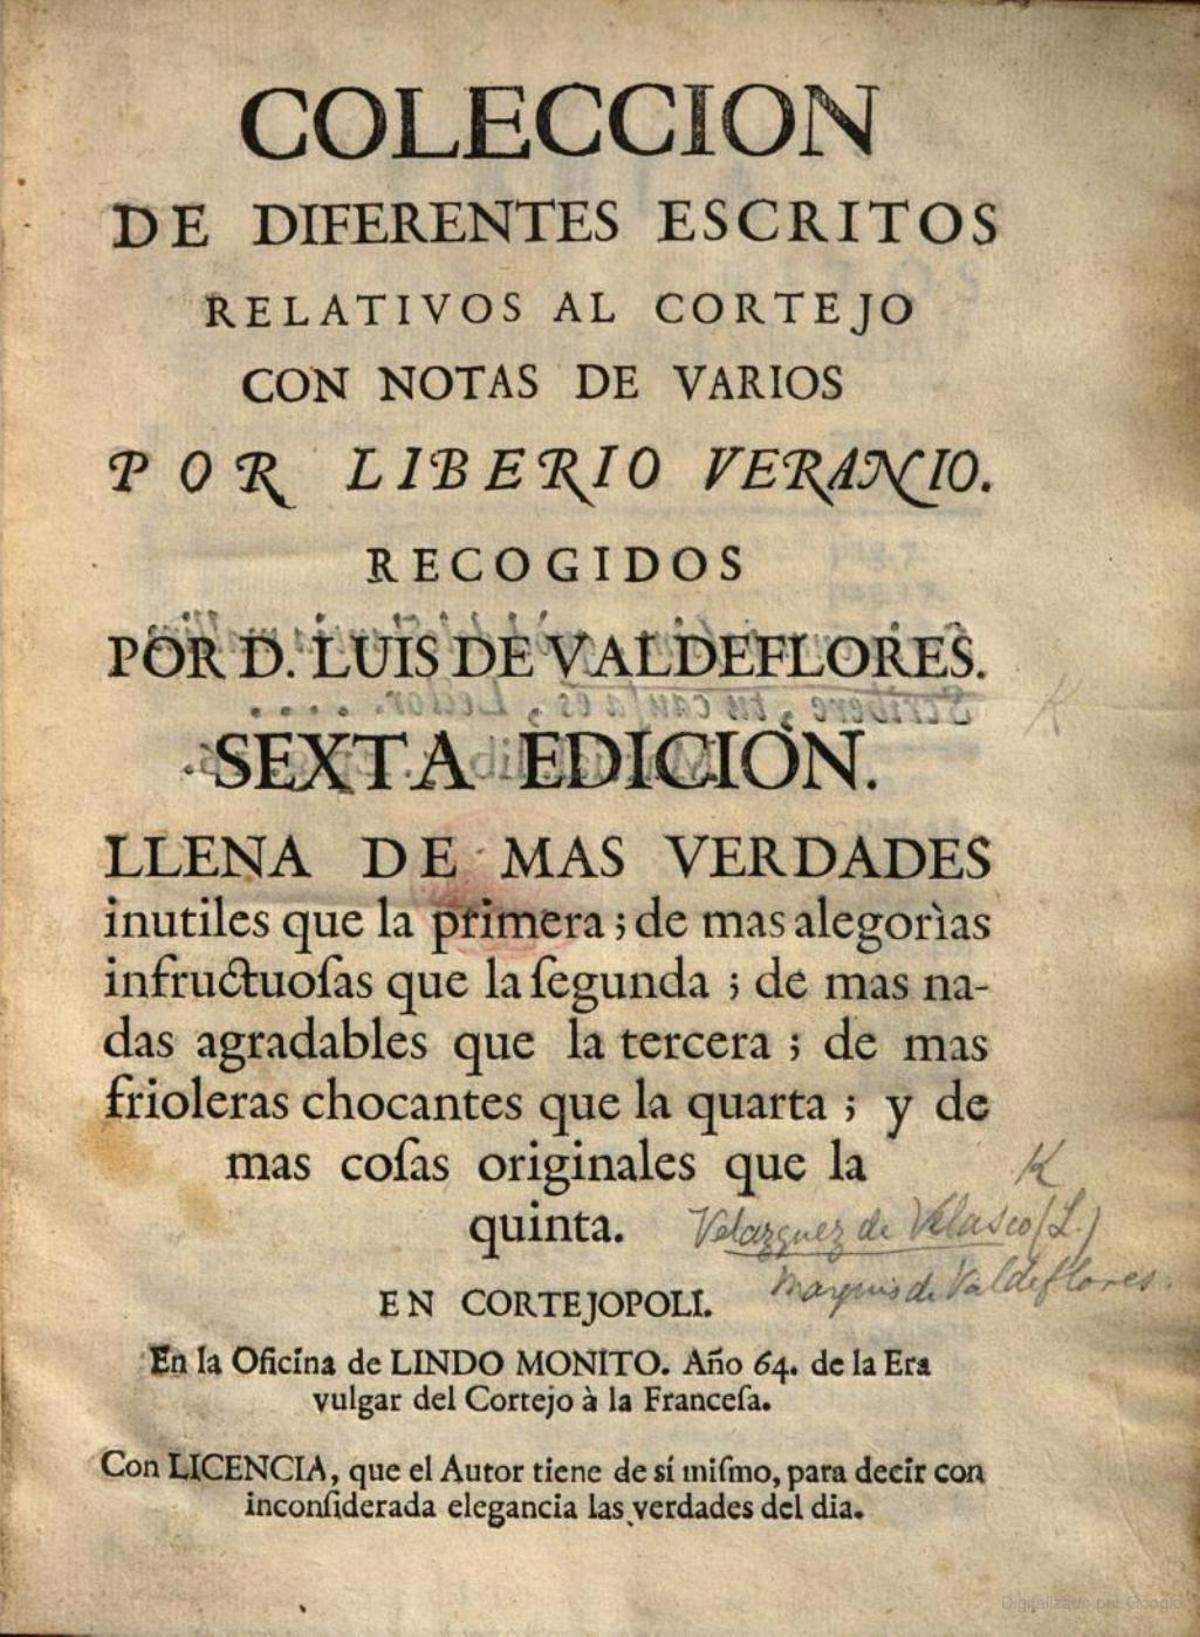 Portada de la publicación satírica que llevó al malaugeño Luis Velázquez, marqués de Valdeflores, a la cárcel.